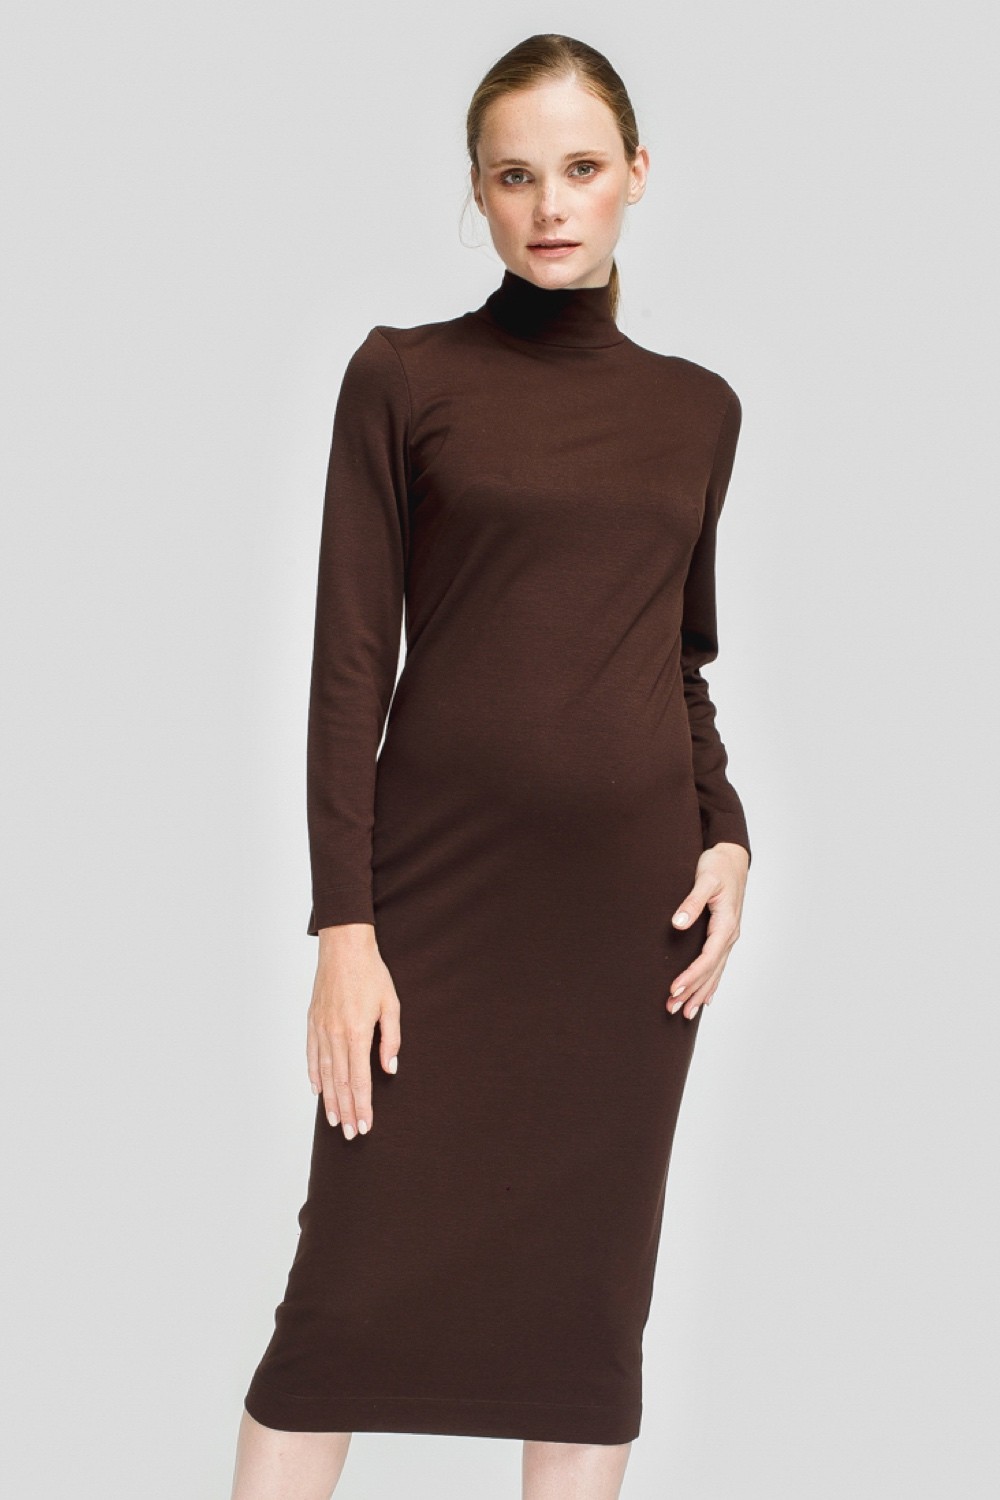 Chocolate sheath maternity-friendly midi dress